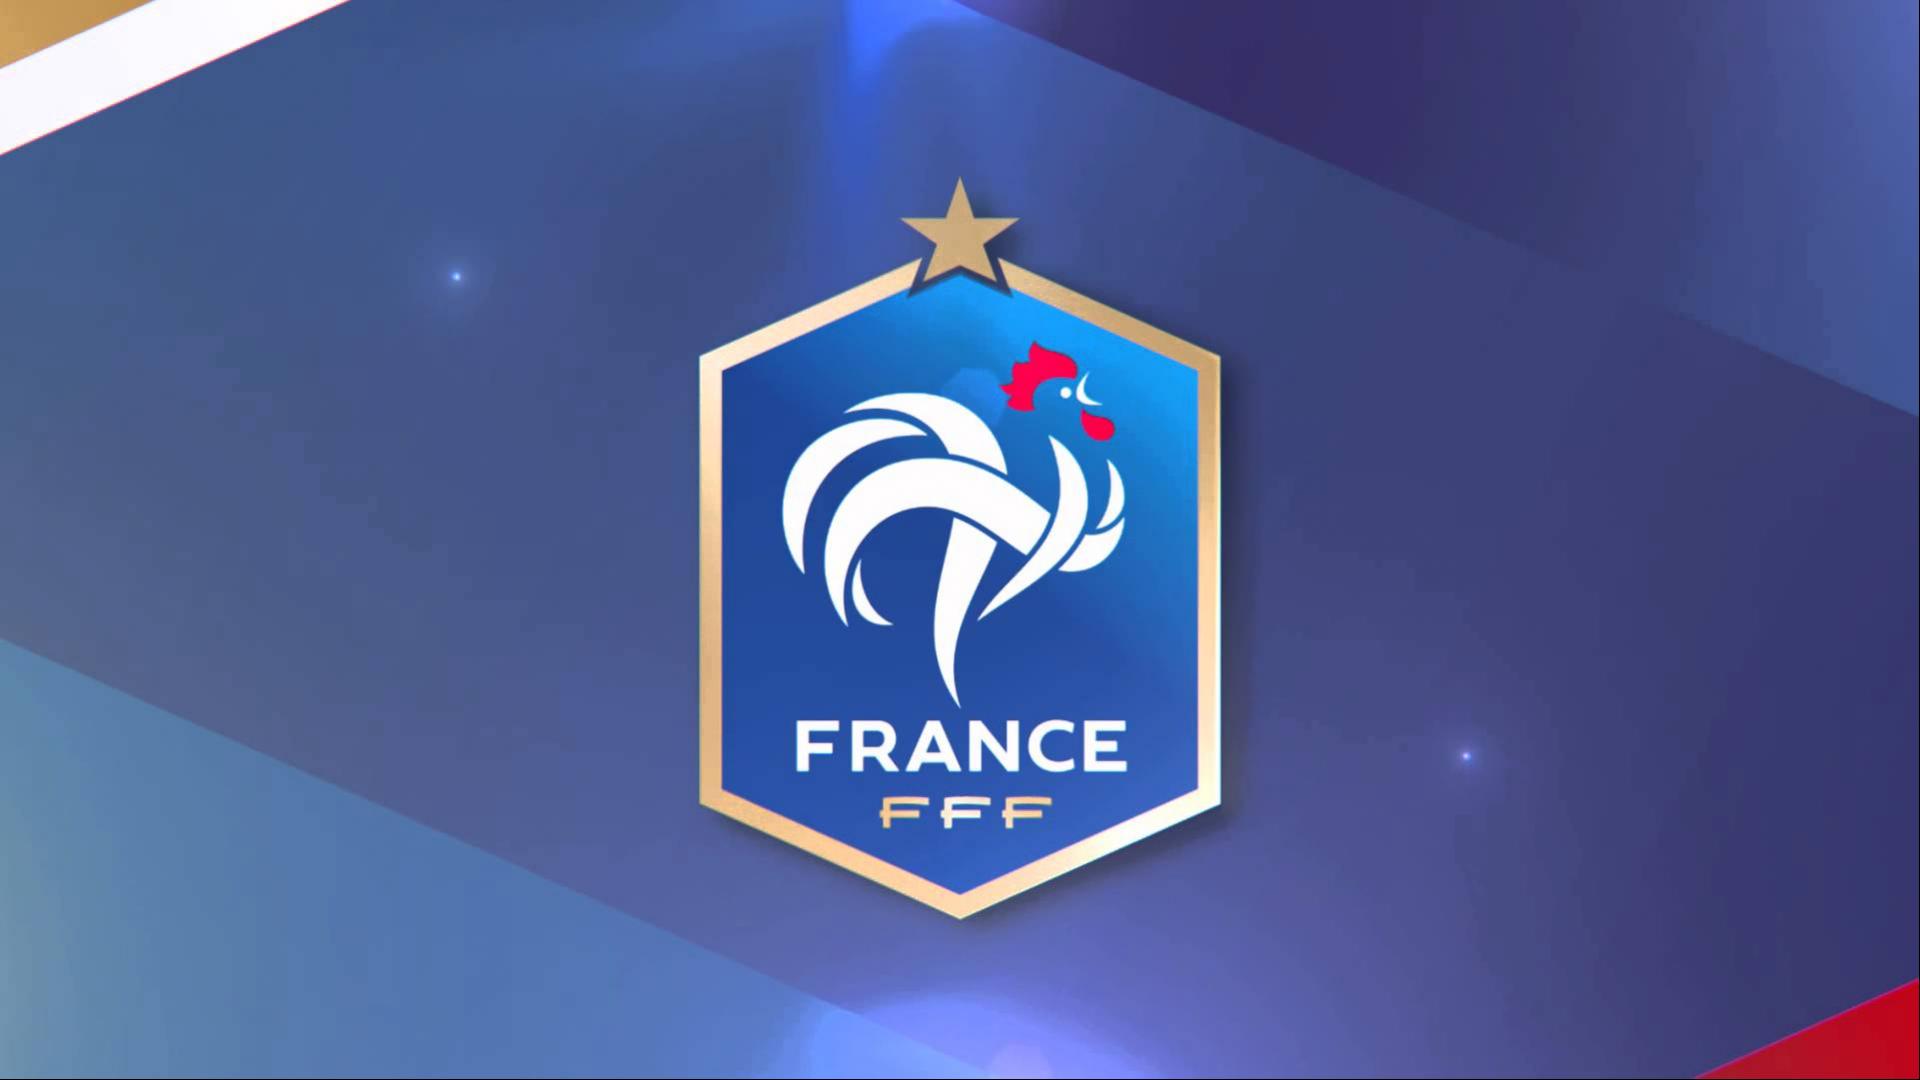 France Football Logo Wallpaper in HD Wallpaper. Wallpaper Download. High Resolution Wallpaper